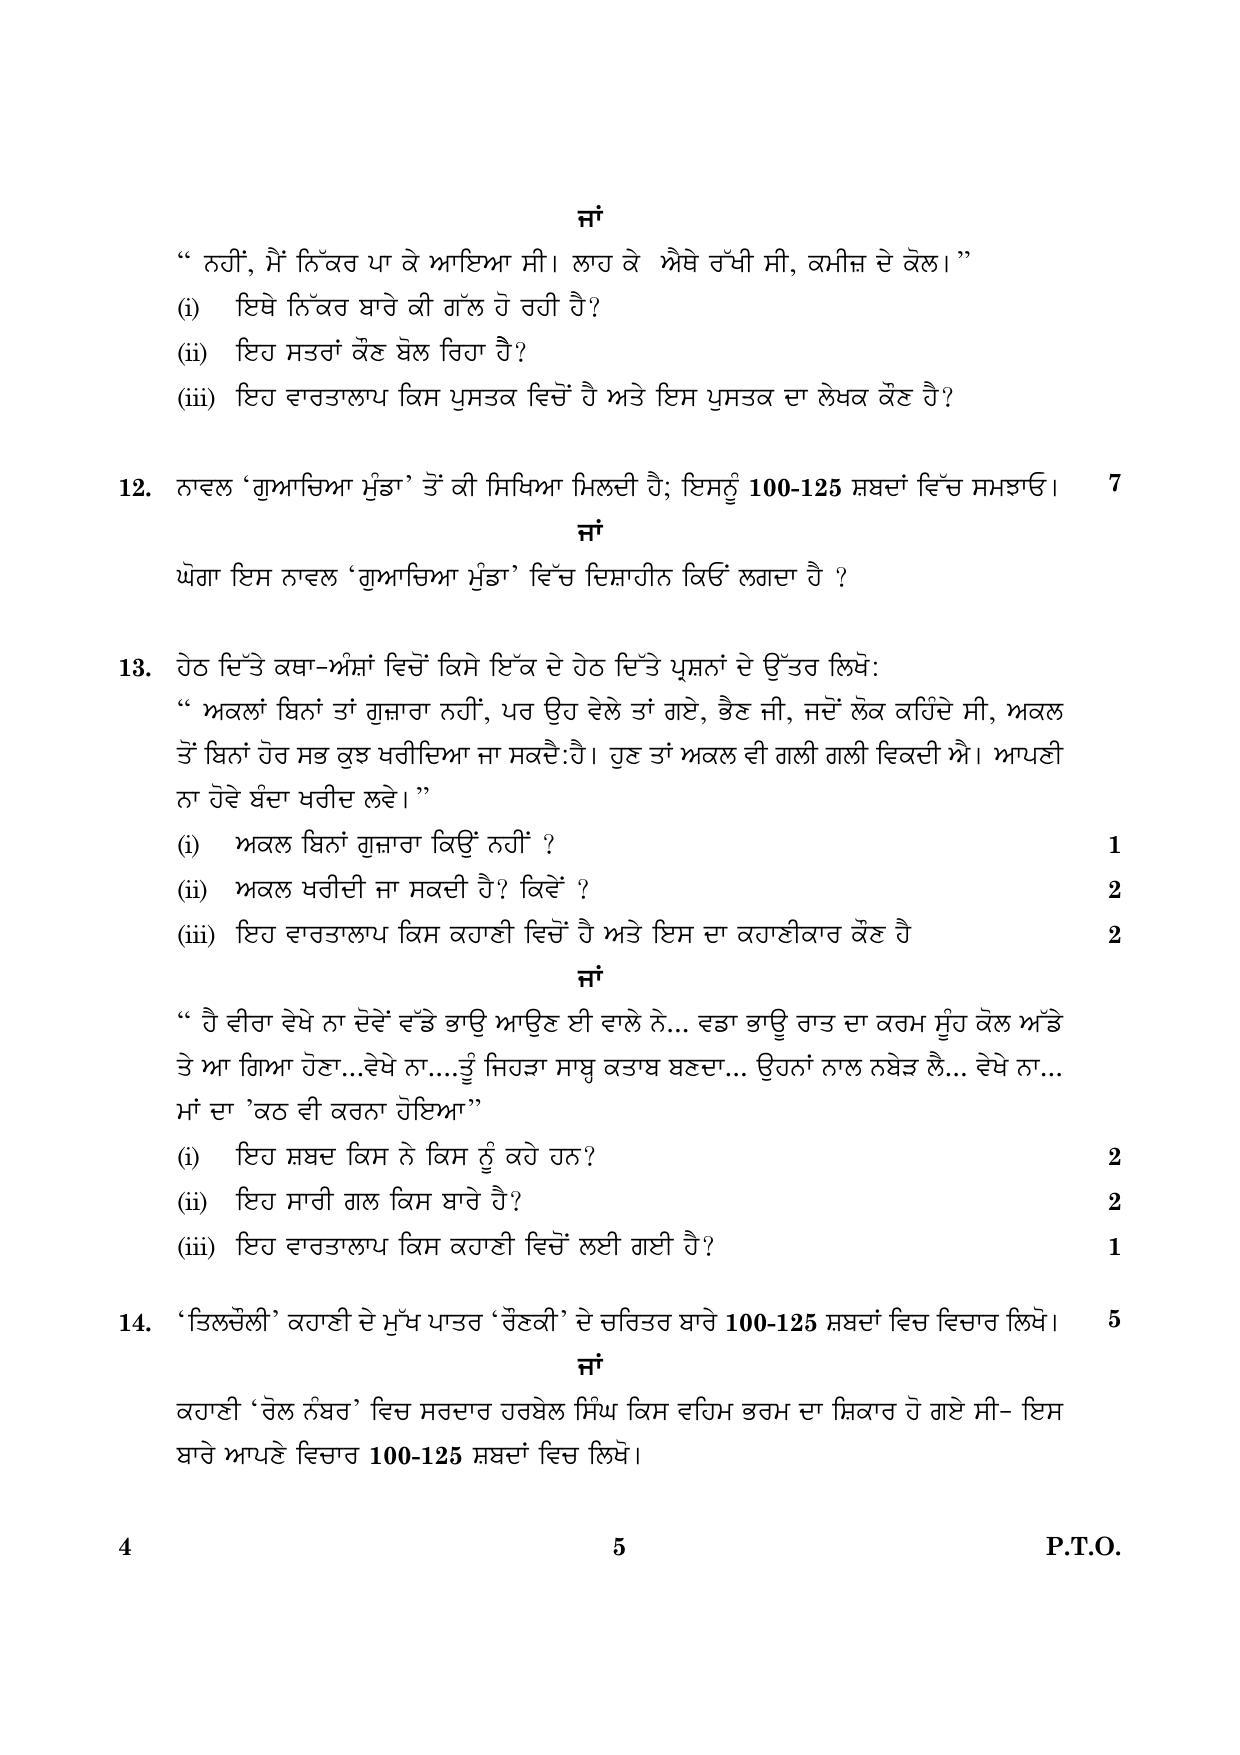 CBSE Class 12 004 Punjabi 2016 Question Paper - Page 5